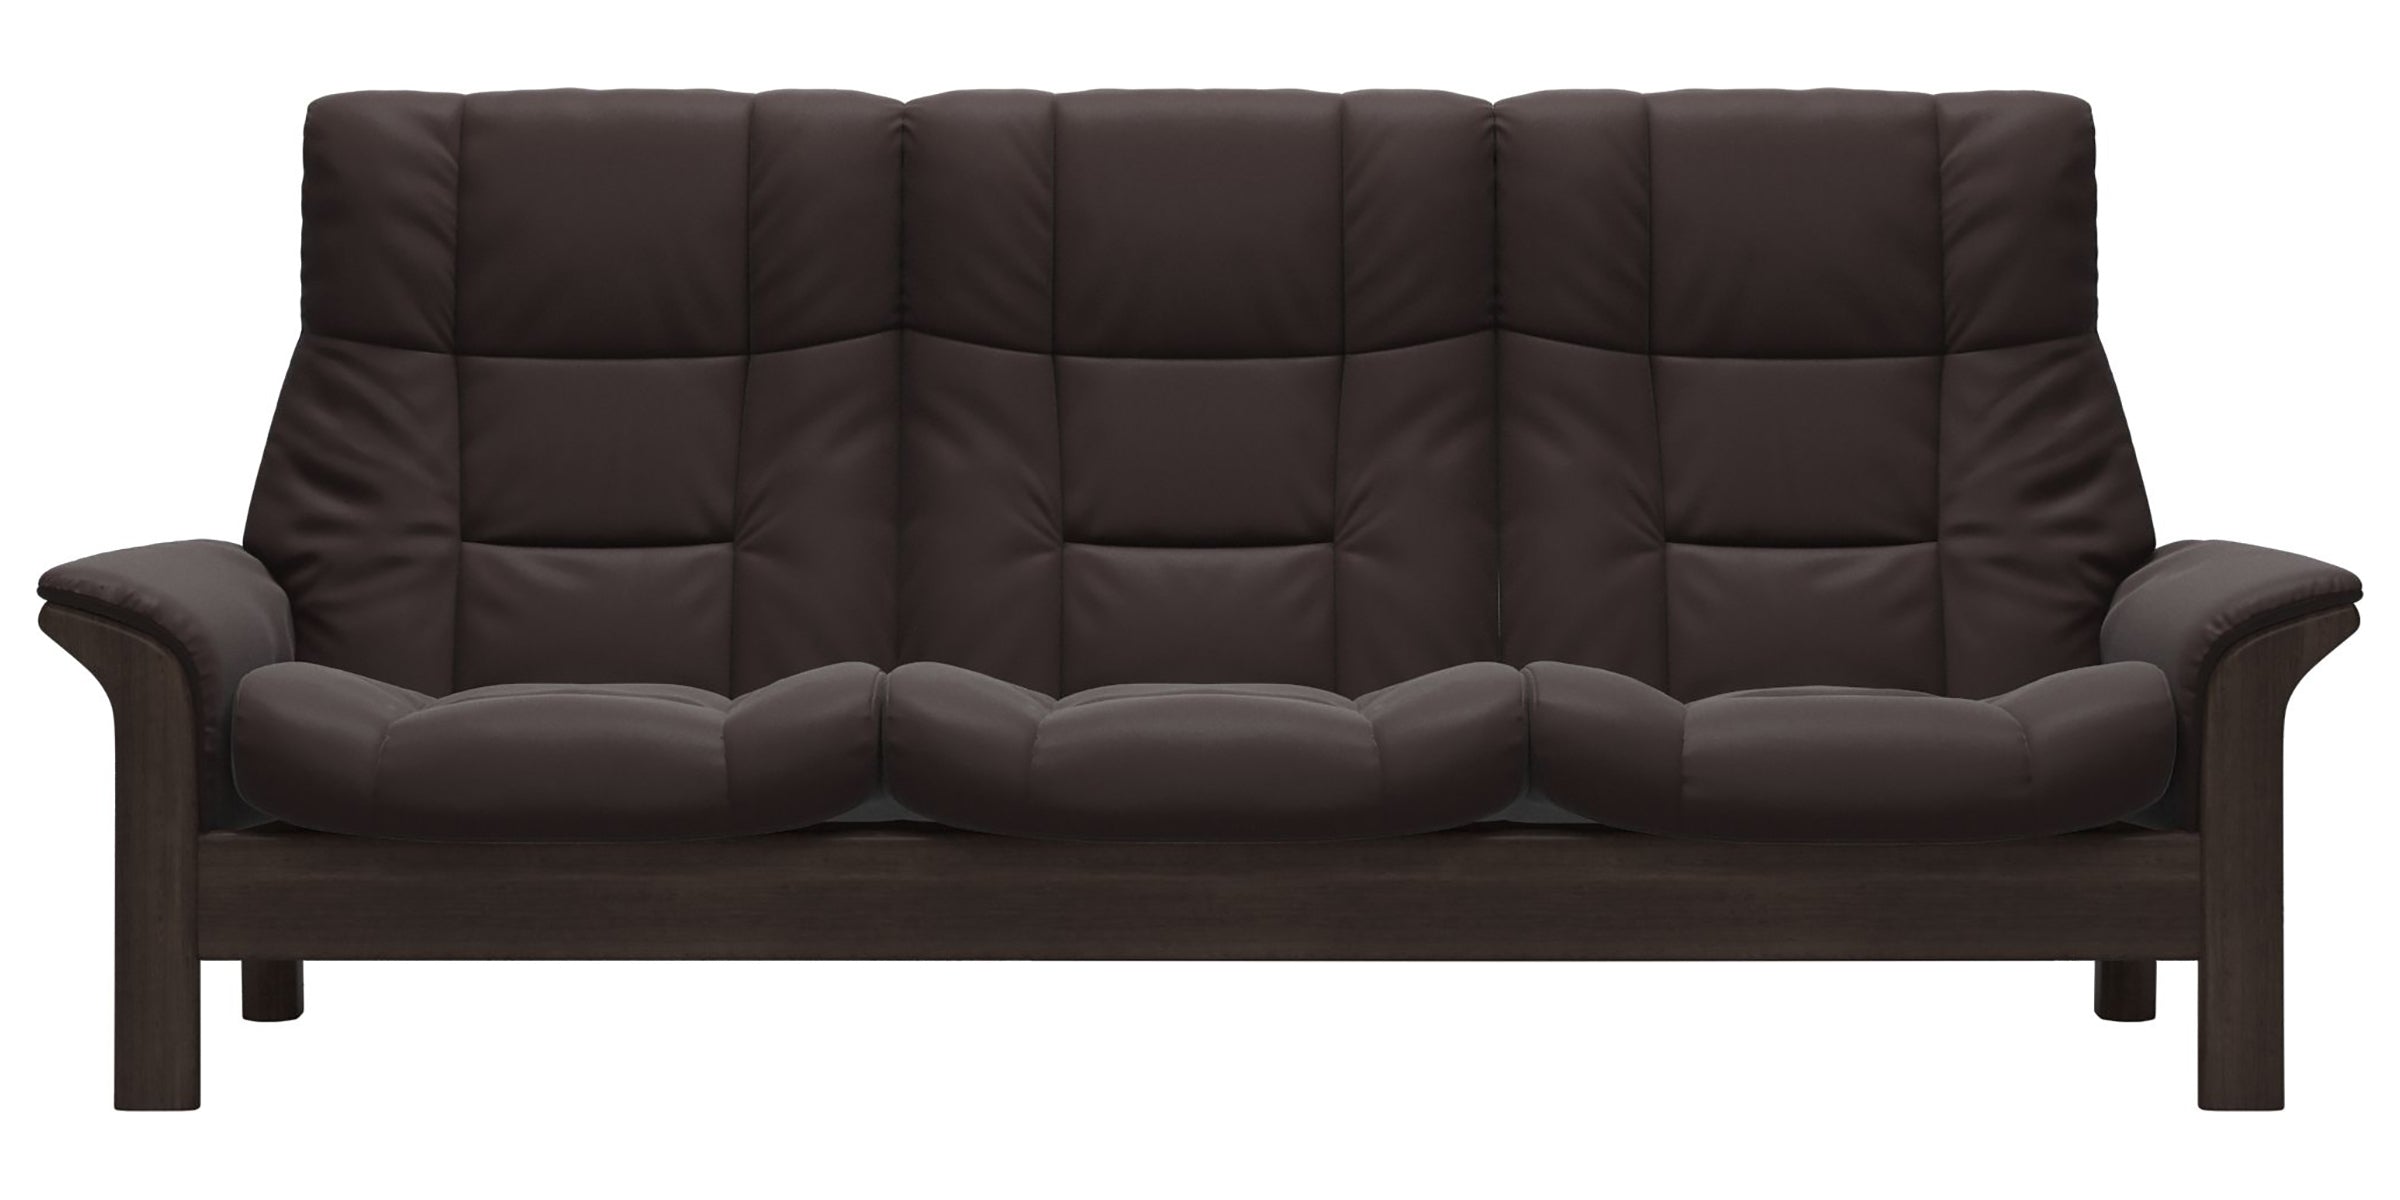 Paloma Leather Chocolate and Wenge Base | Stressless Buckingham 3-Seater High Back Sofa | Valley Ridge Furniture